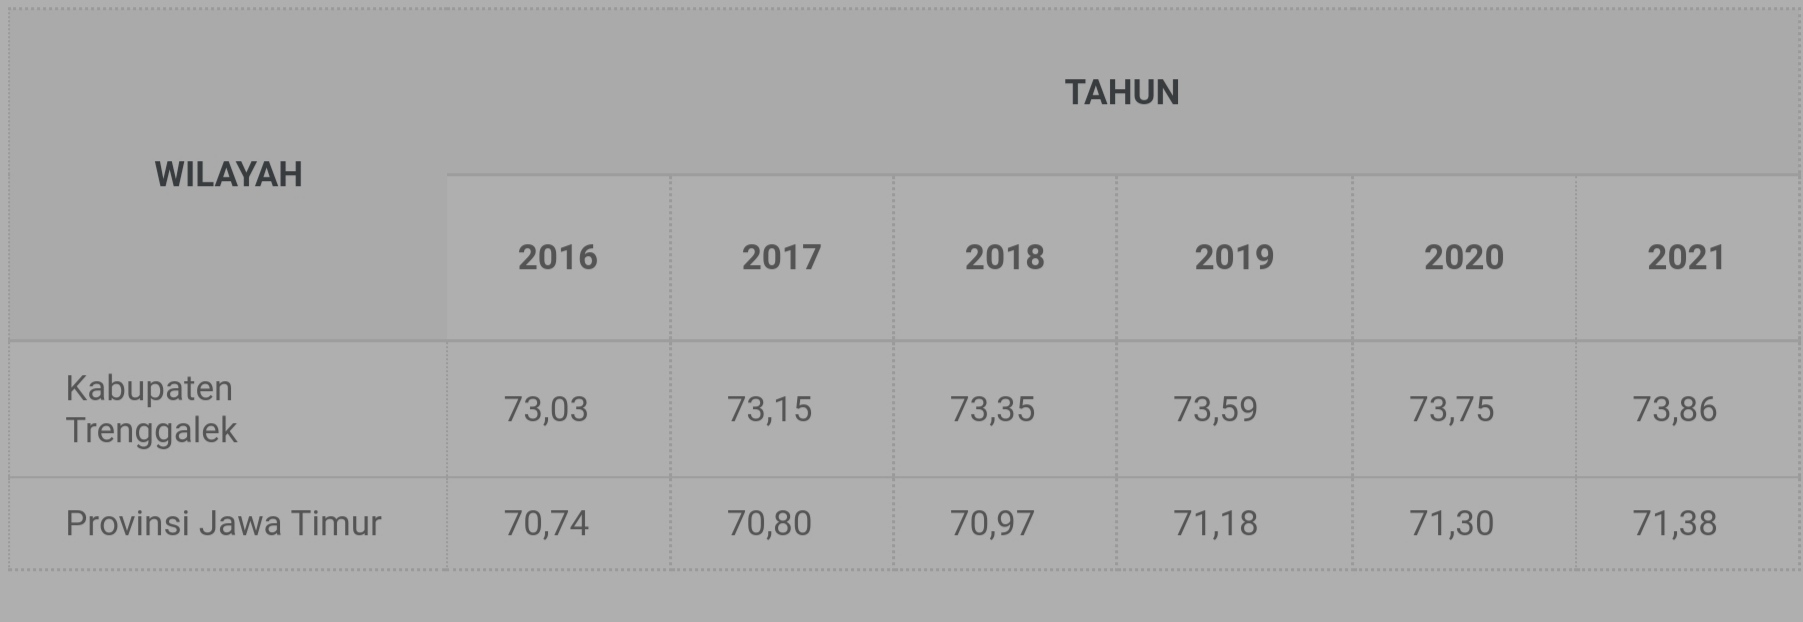 Data Badan Pusat Statistik Kabupaten Trenggalek